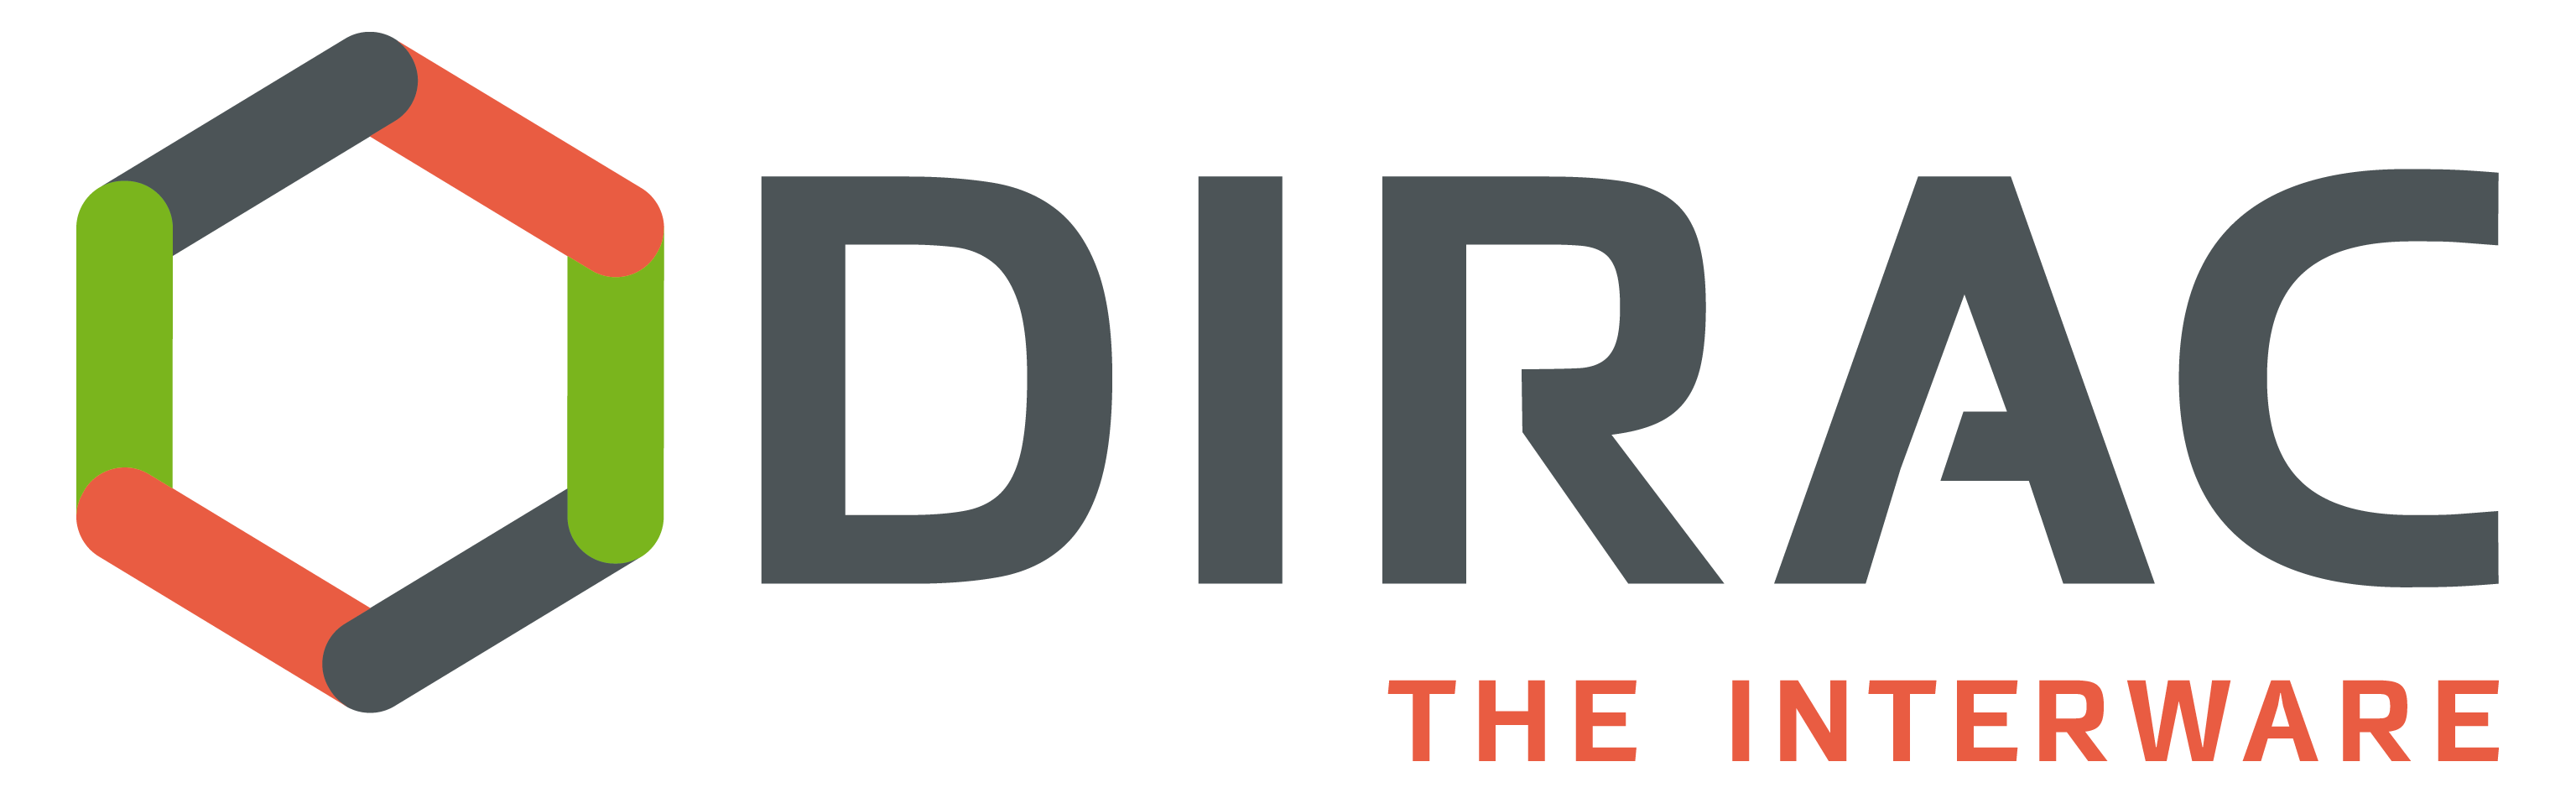 _images/DIRAC-logo.png